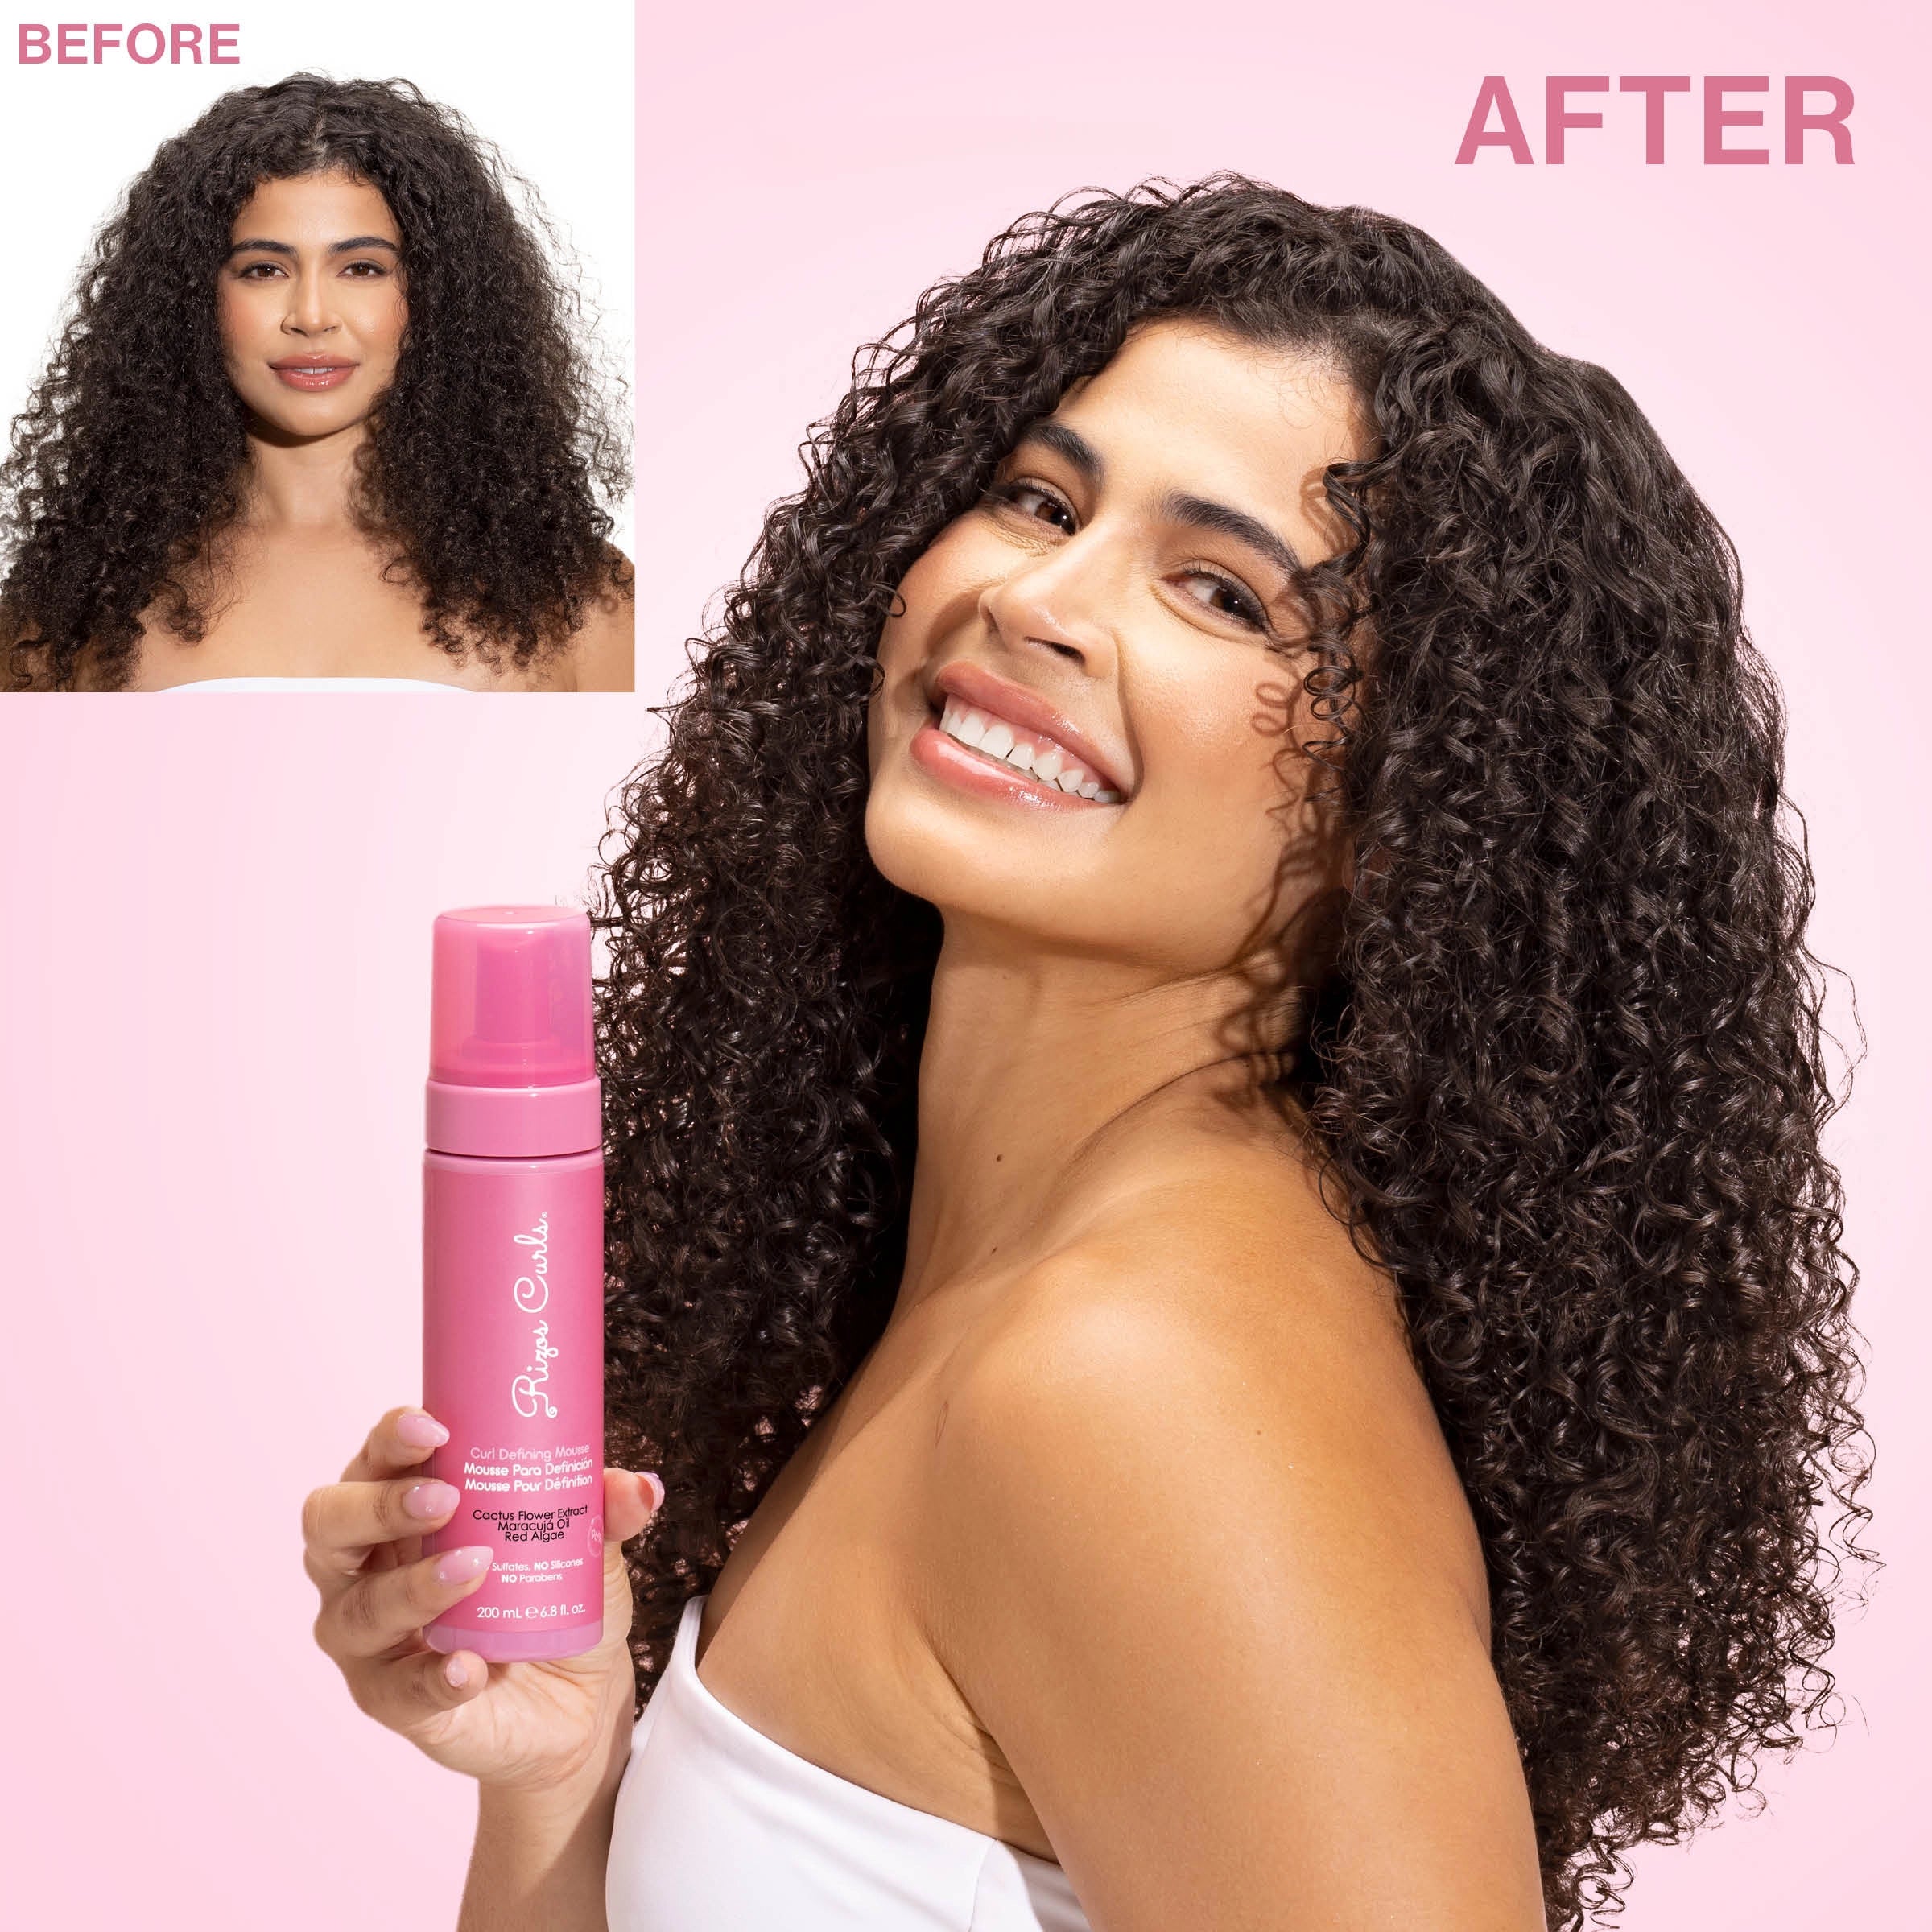 30Ml Curly Hair Mousse Anti-Frizz Hair Foam Mousse Sculpting Curly Hair  Mousse Curly Hair Finishing for Women